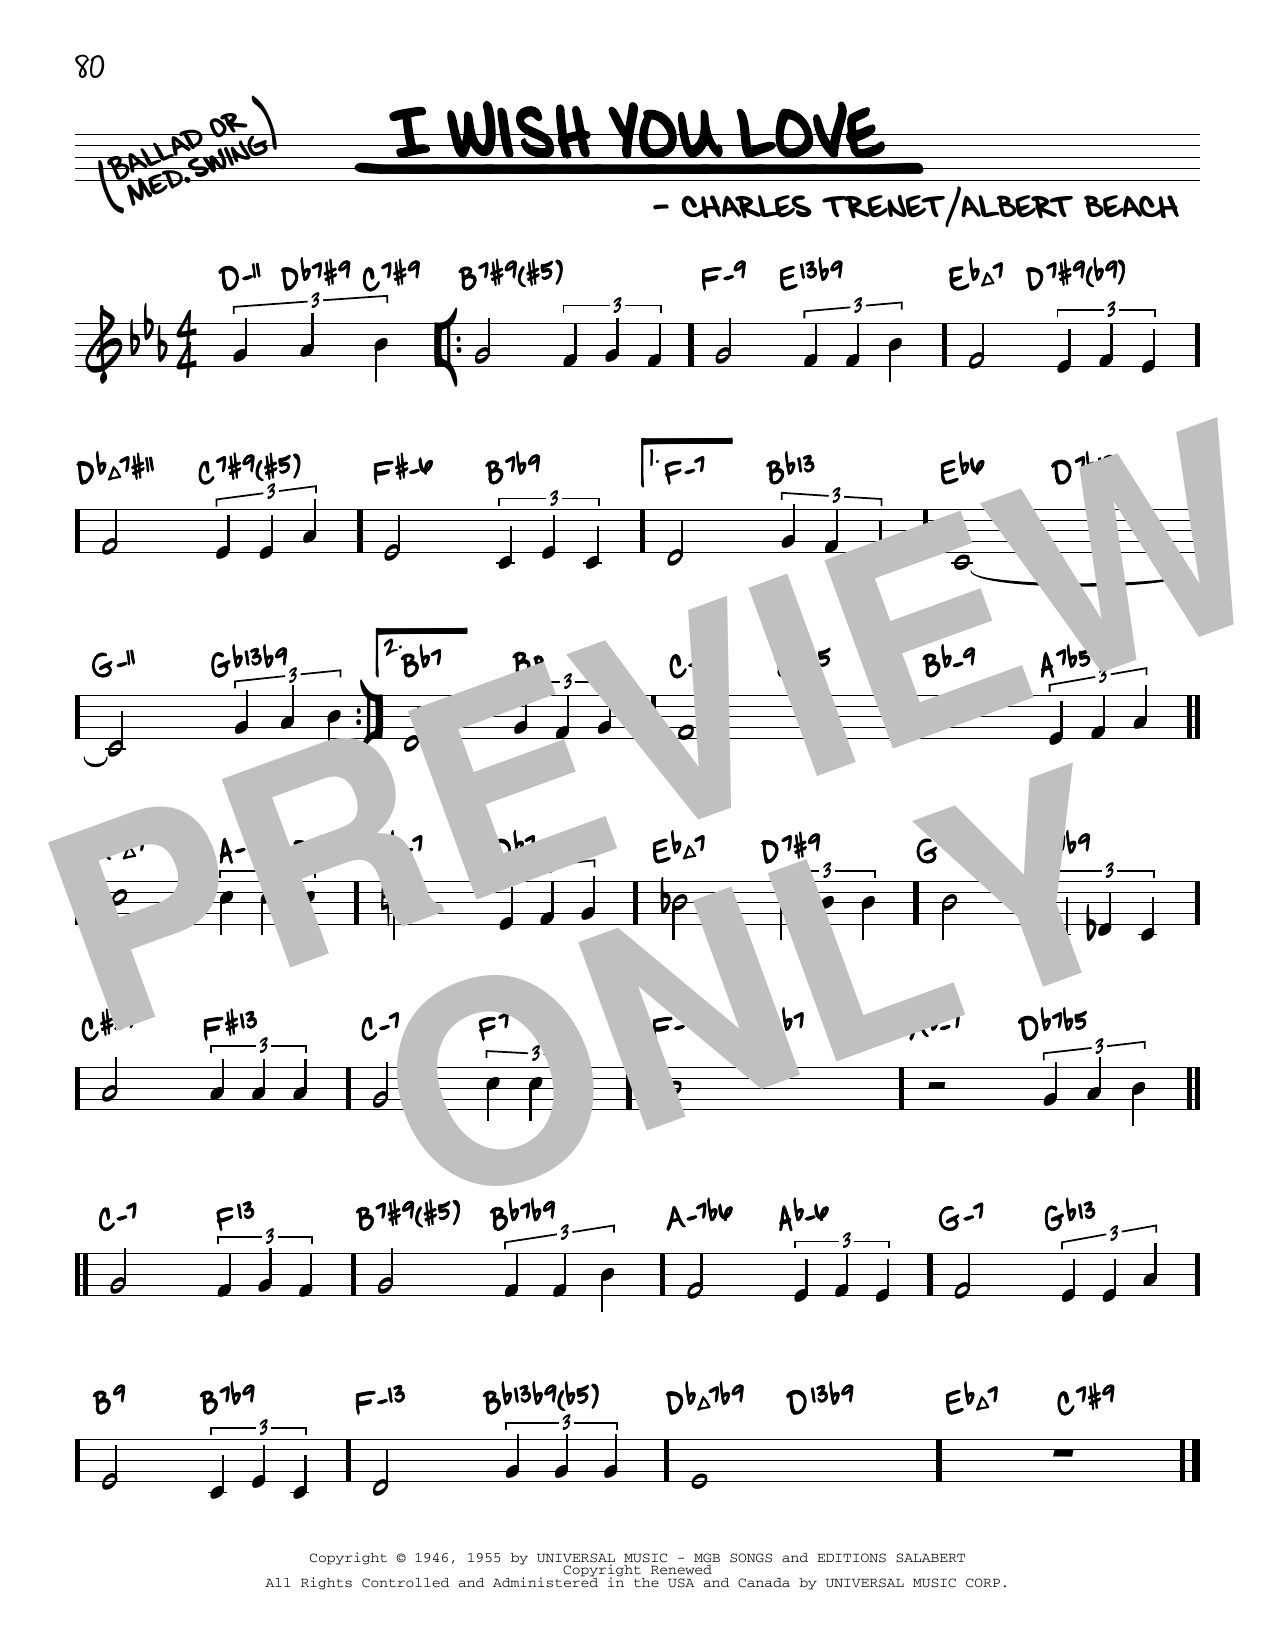 Charles Trenet I Wish You Love (arr. David Hazeltine) Sheet Music Notes & Chords for Real Book – Enhanced Chords - Download or Print PDF